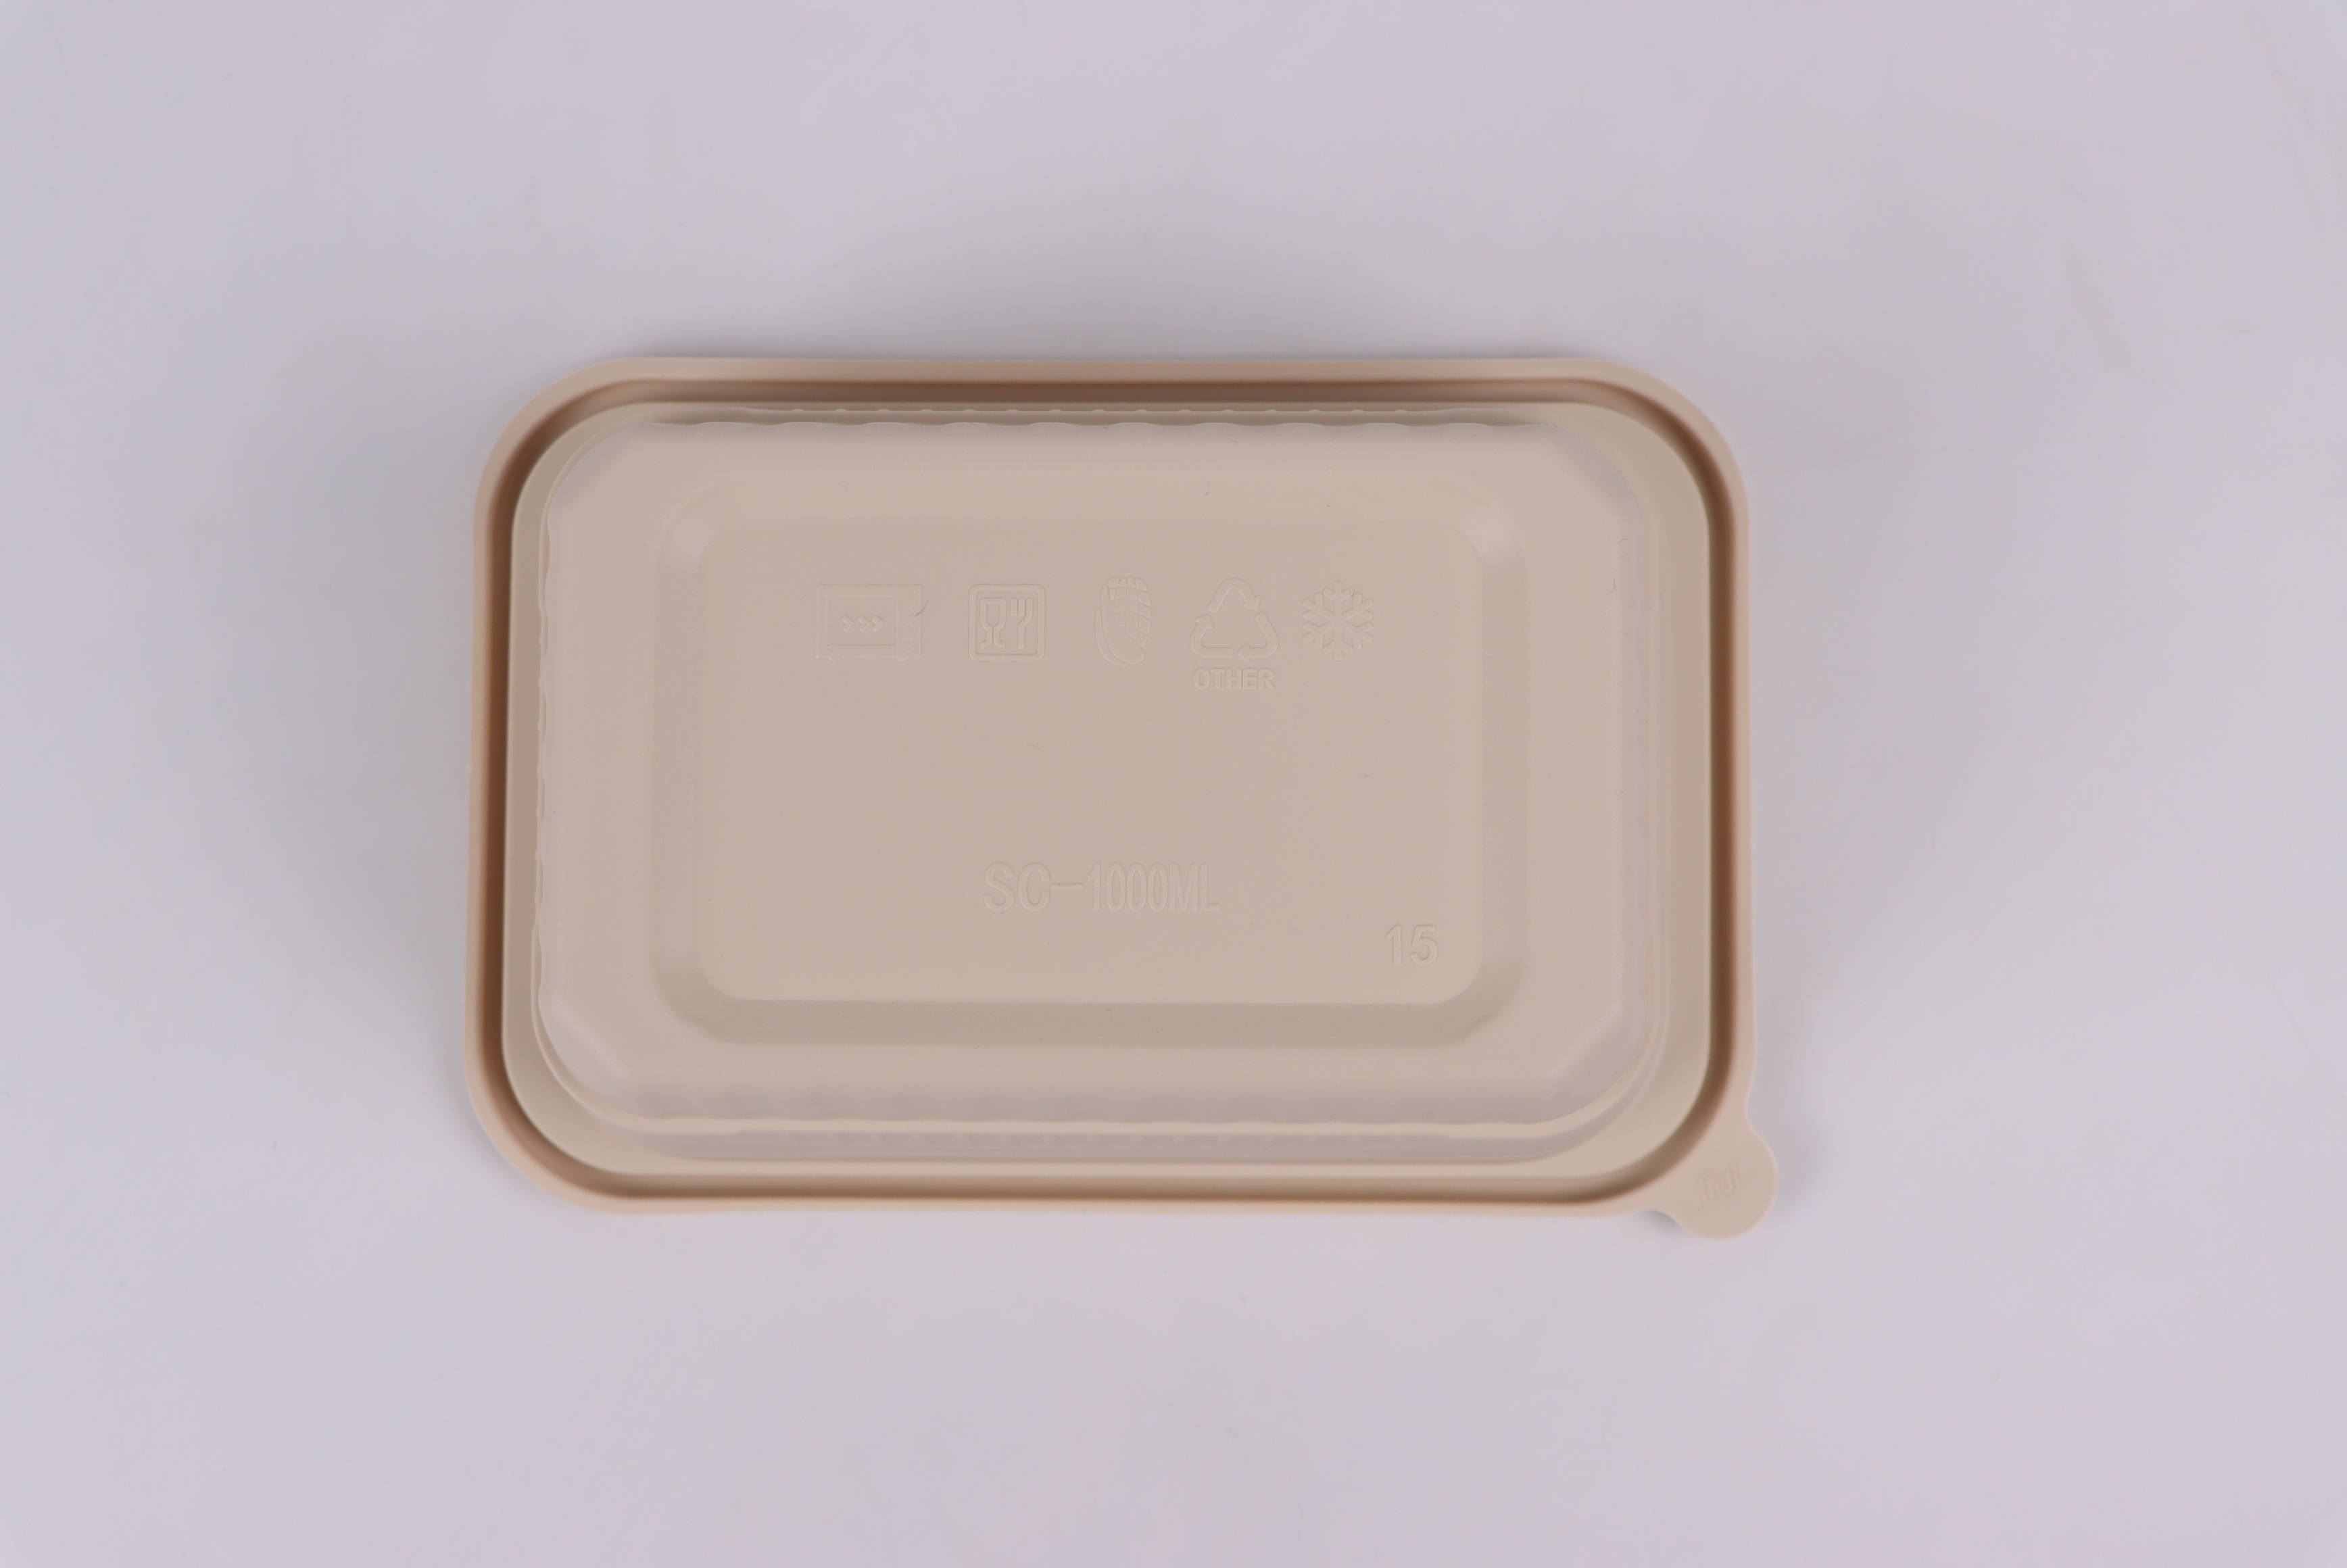 A single-box lunch box